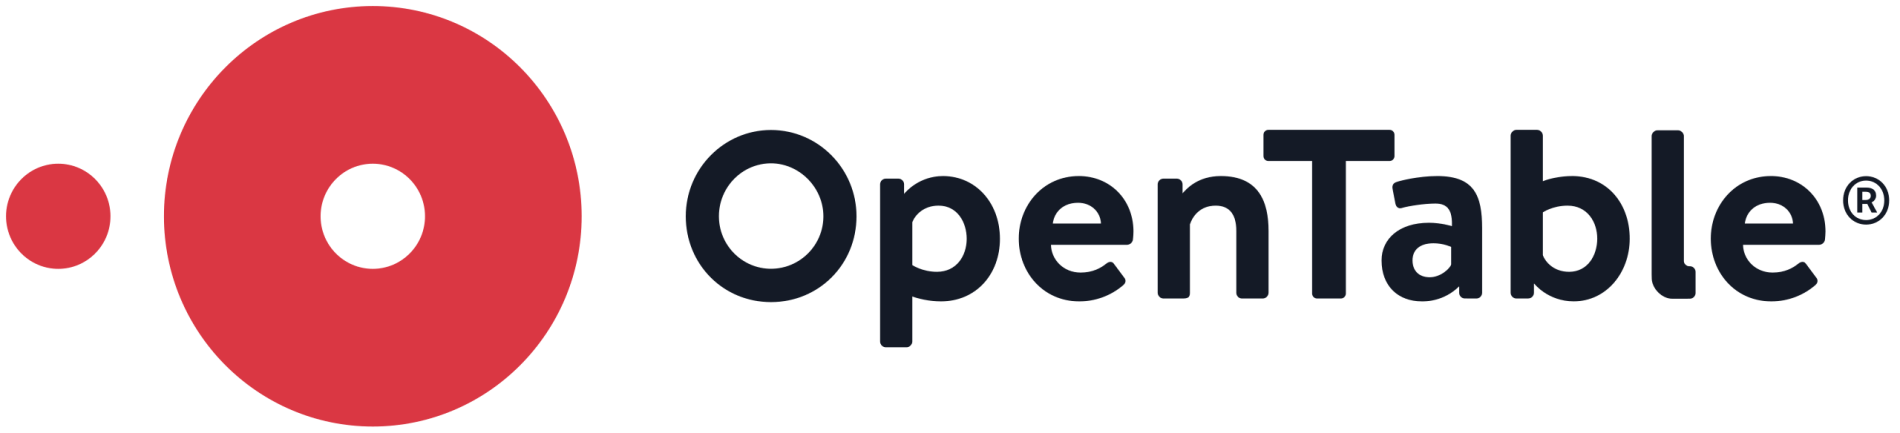 OpenTable_logo.svg